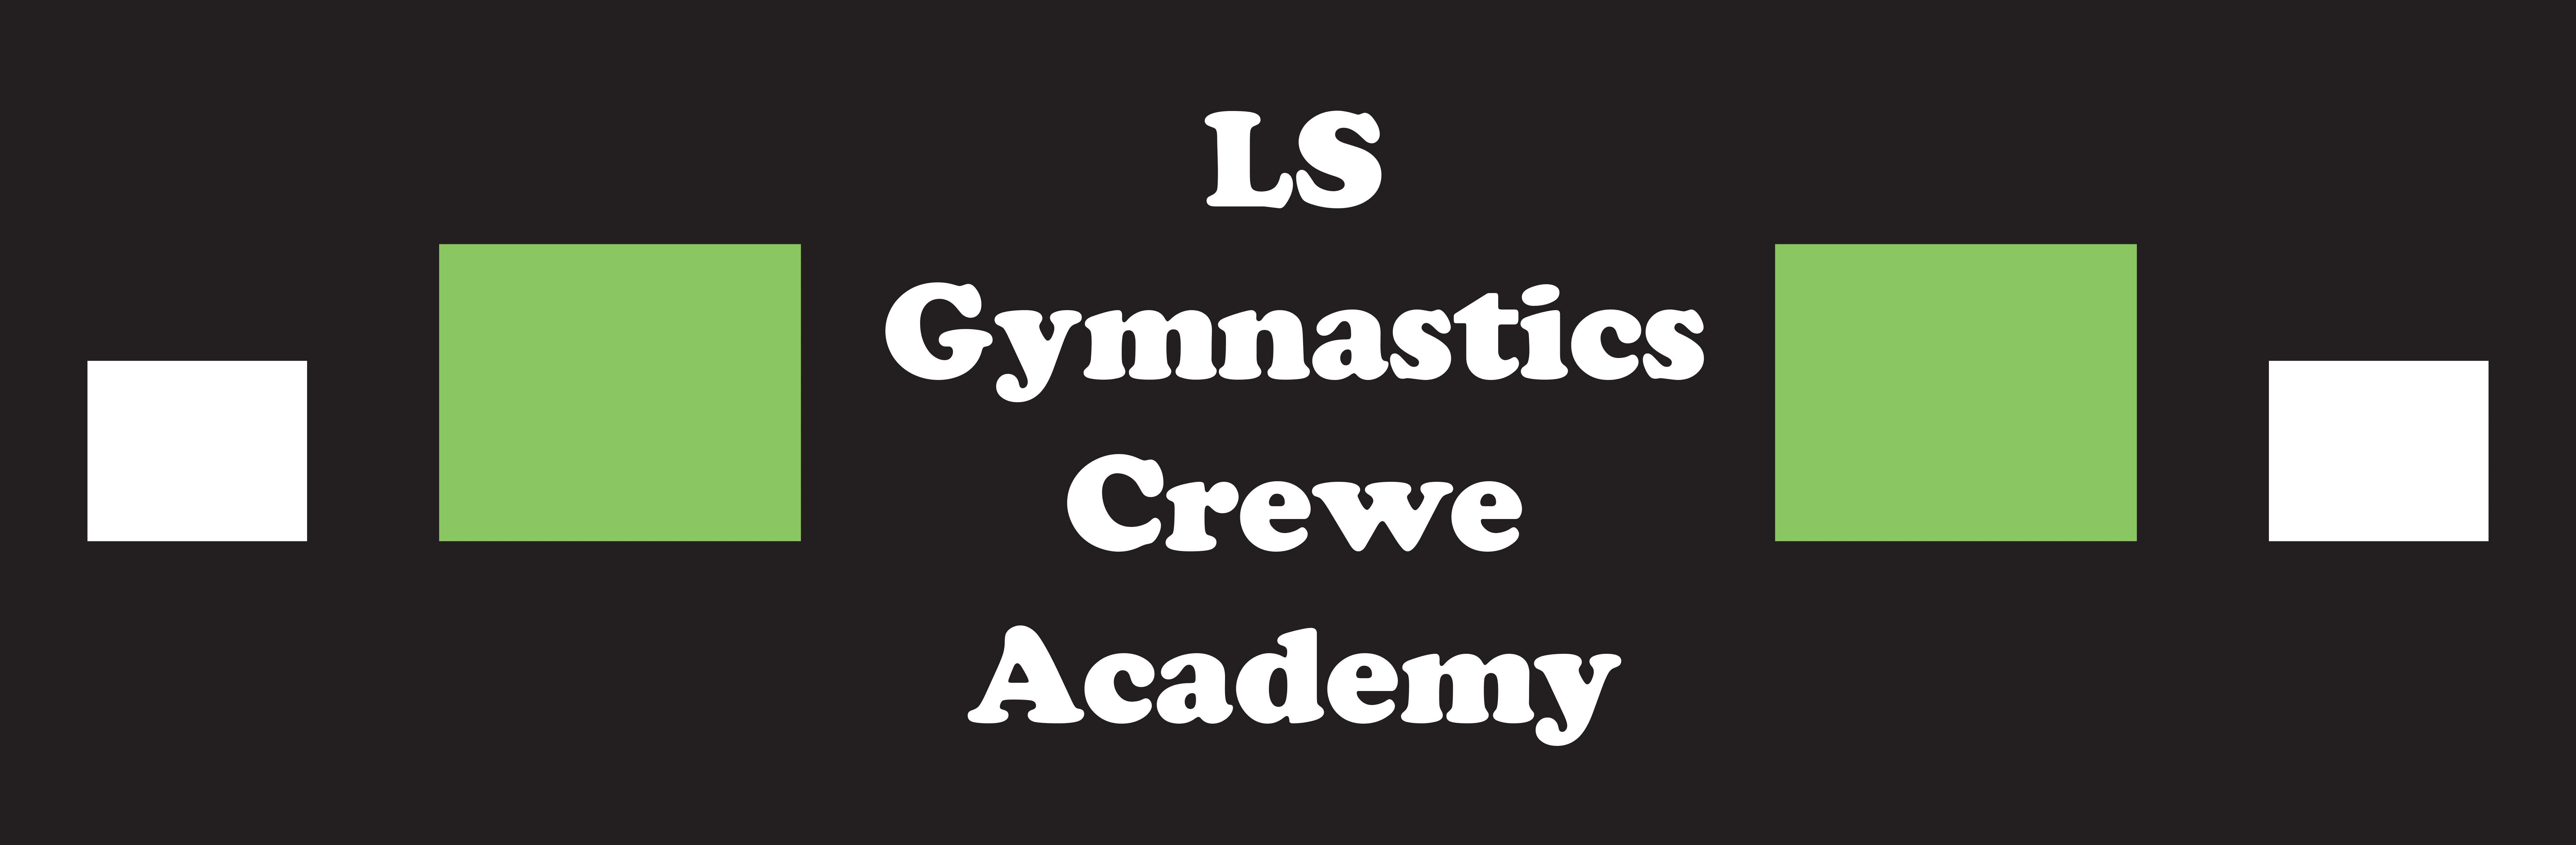 LS Gymnastics